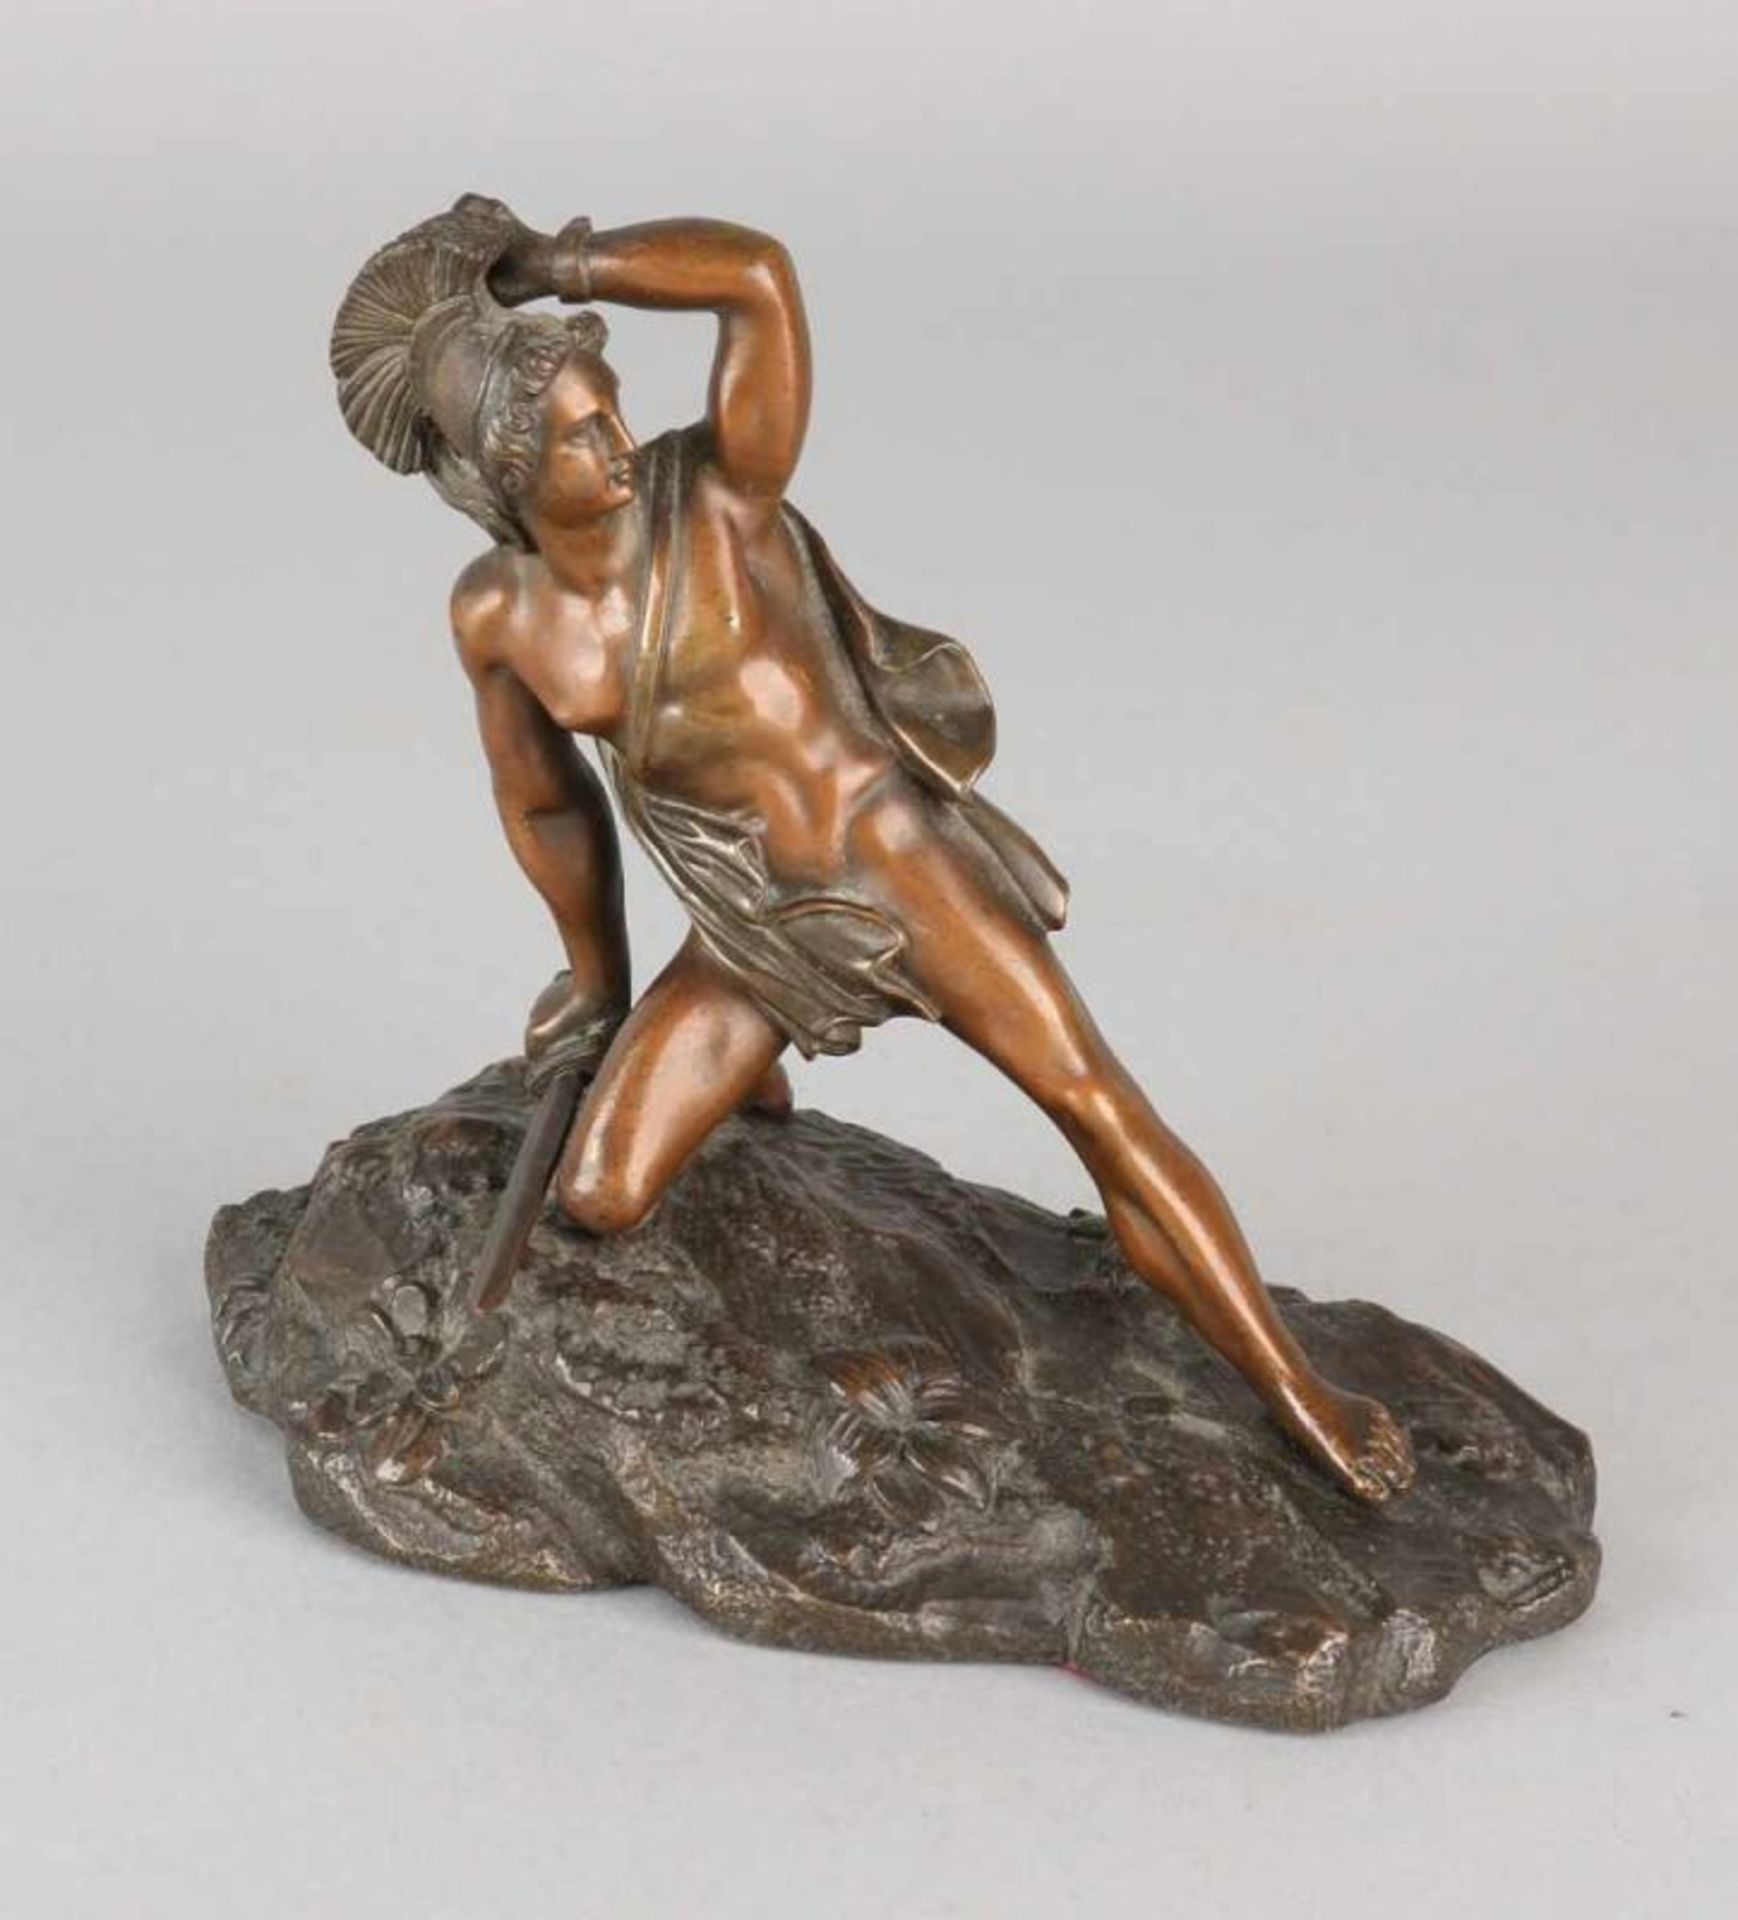 Antique bronze figure. 19th century. With Roman short sword. Size: 11 x 14 x 8 cm. In good